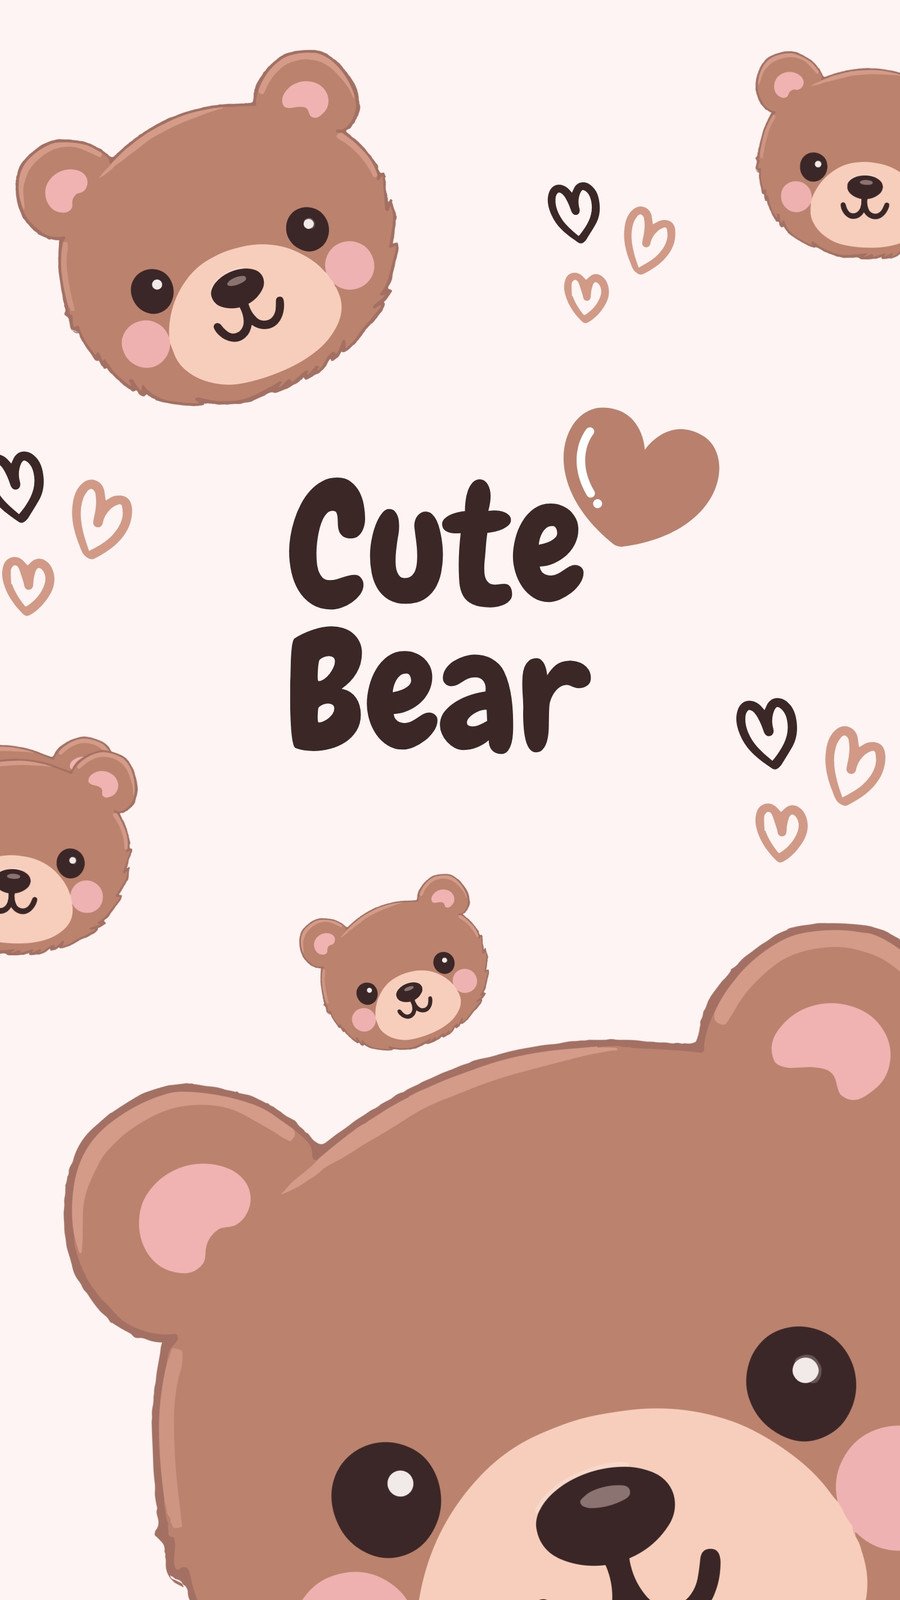 Free and customizable bear templates